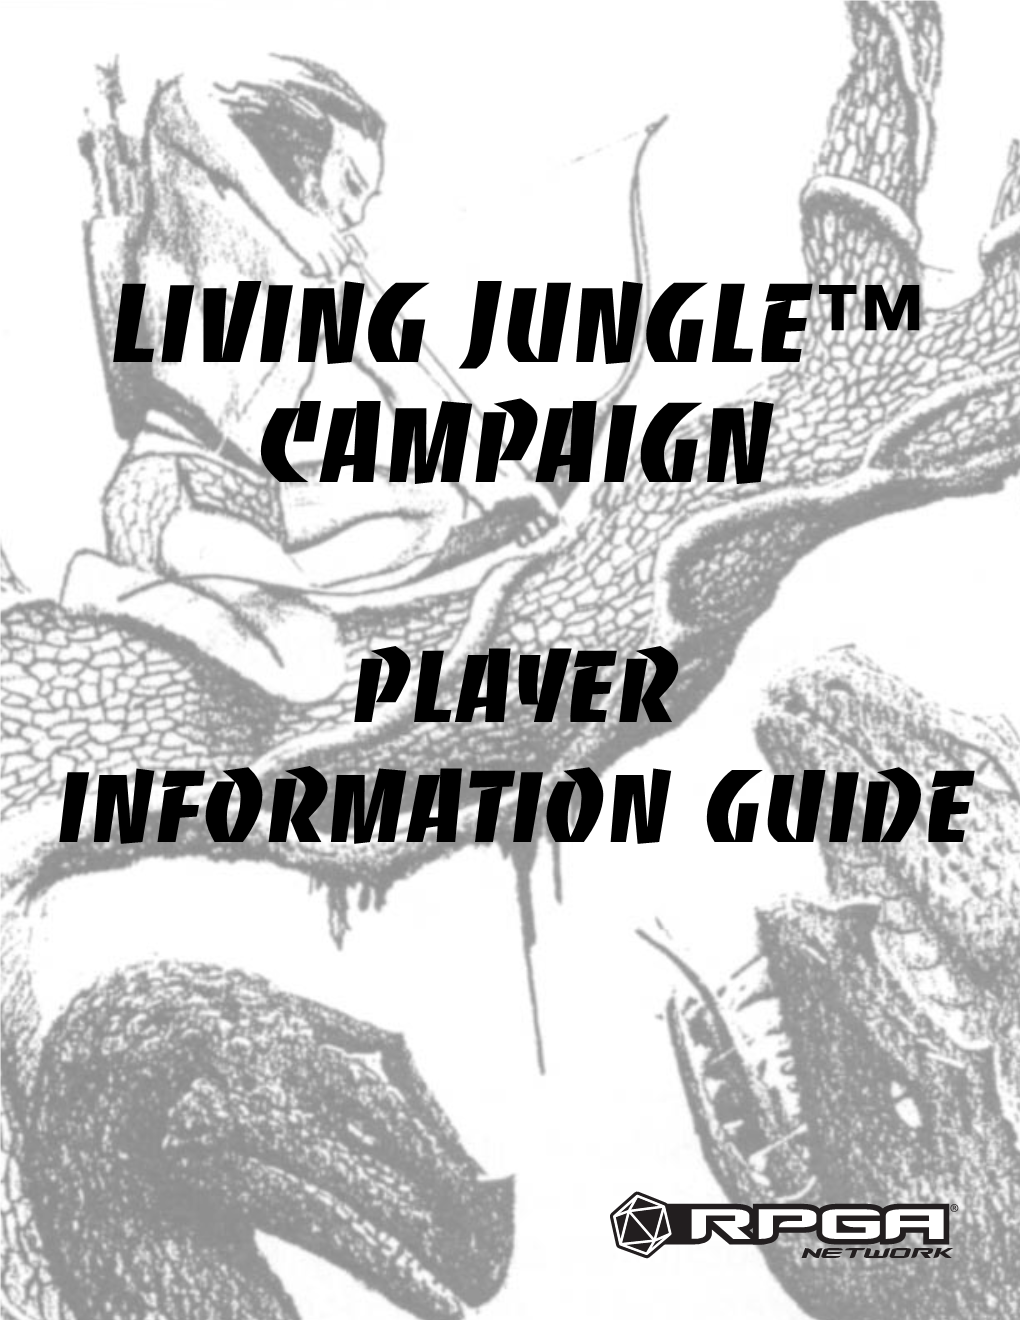 Living Jungle™ Campaign